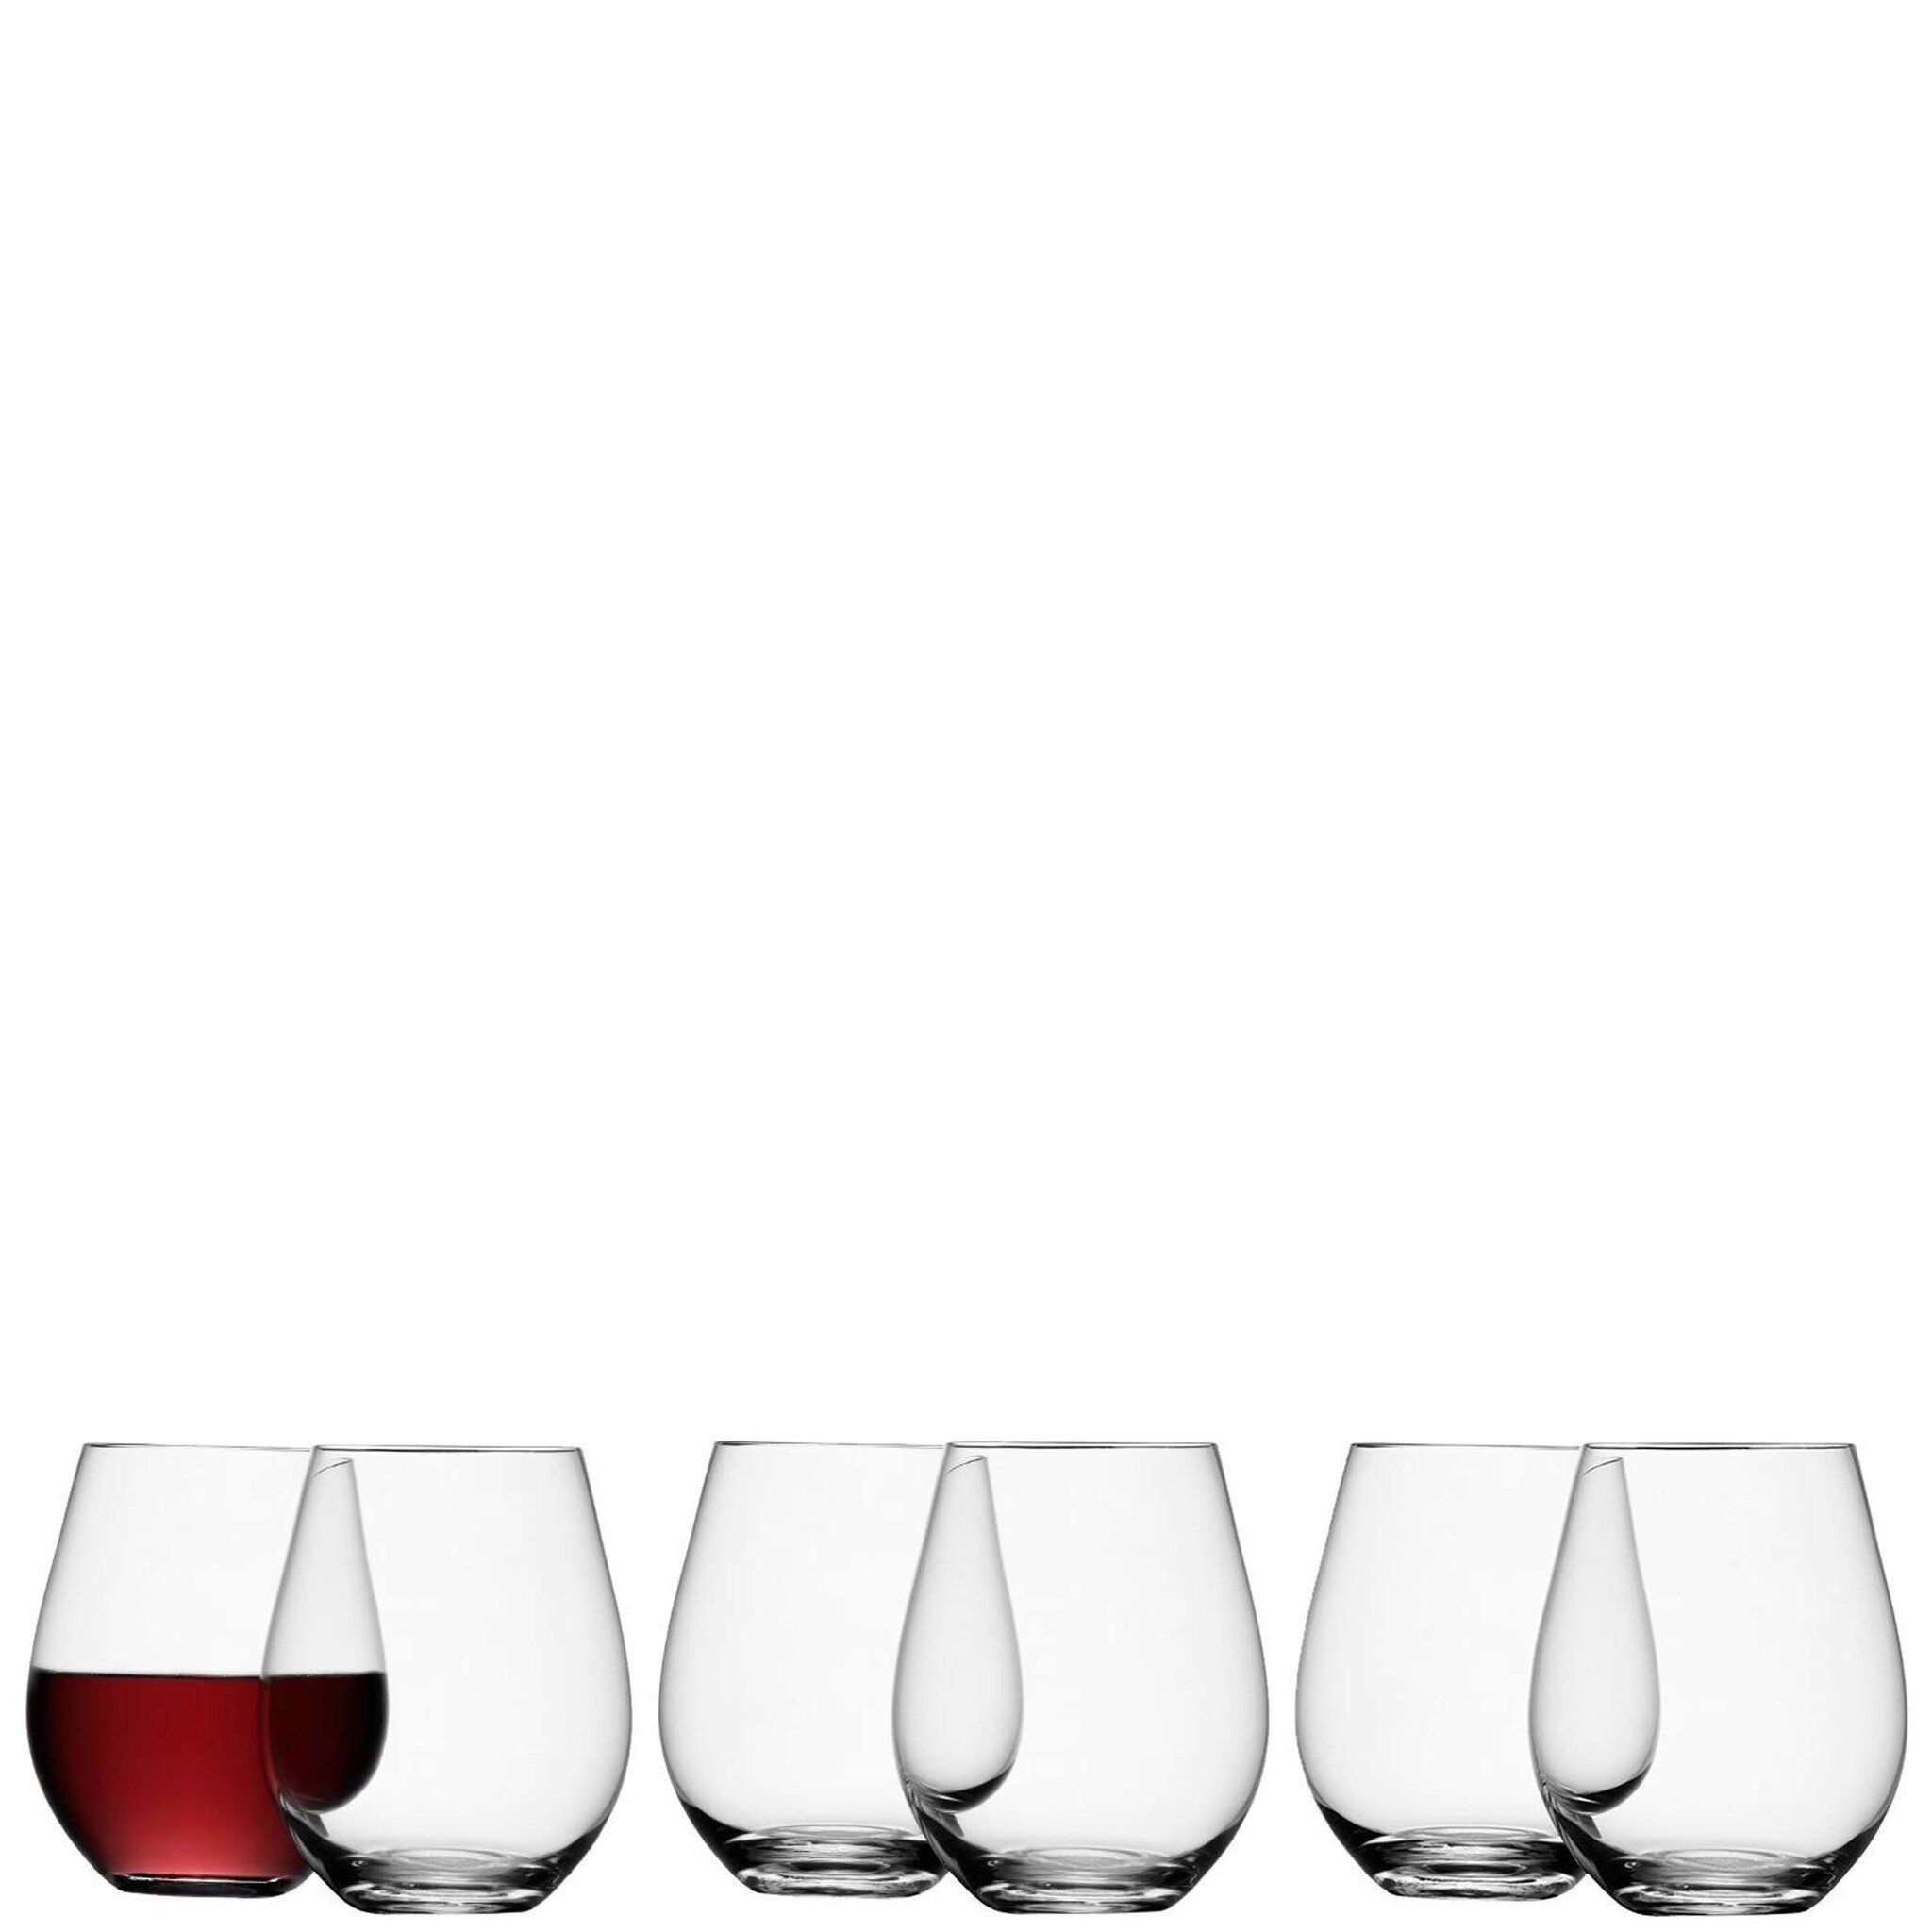 L.S.A. Stemless Rode Wijn Glas 530ml Set van 6 Stuks